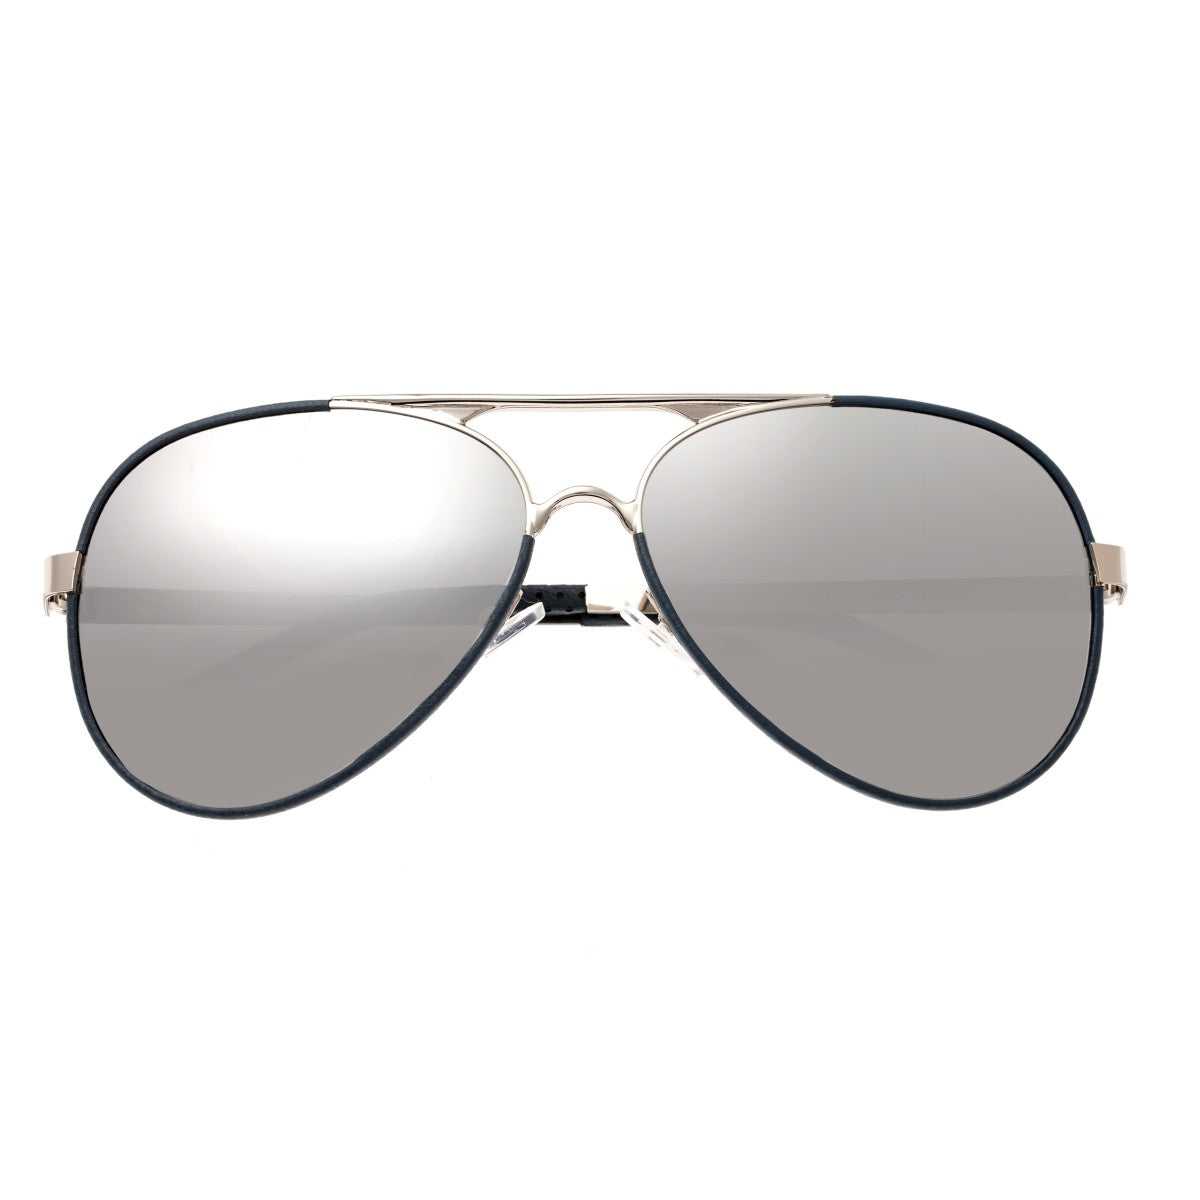 Breed Genesis Polarized Sunglasses - Silver/Silver - BSG046SL